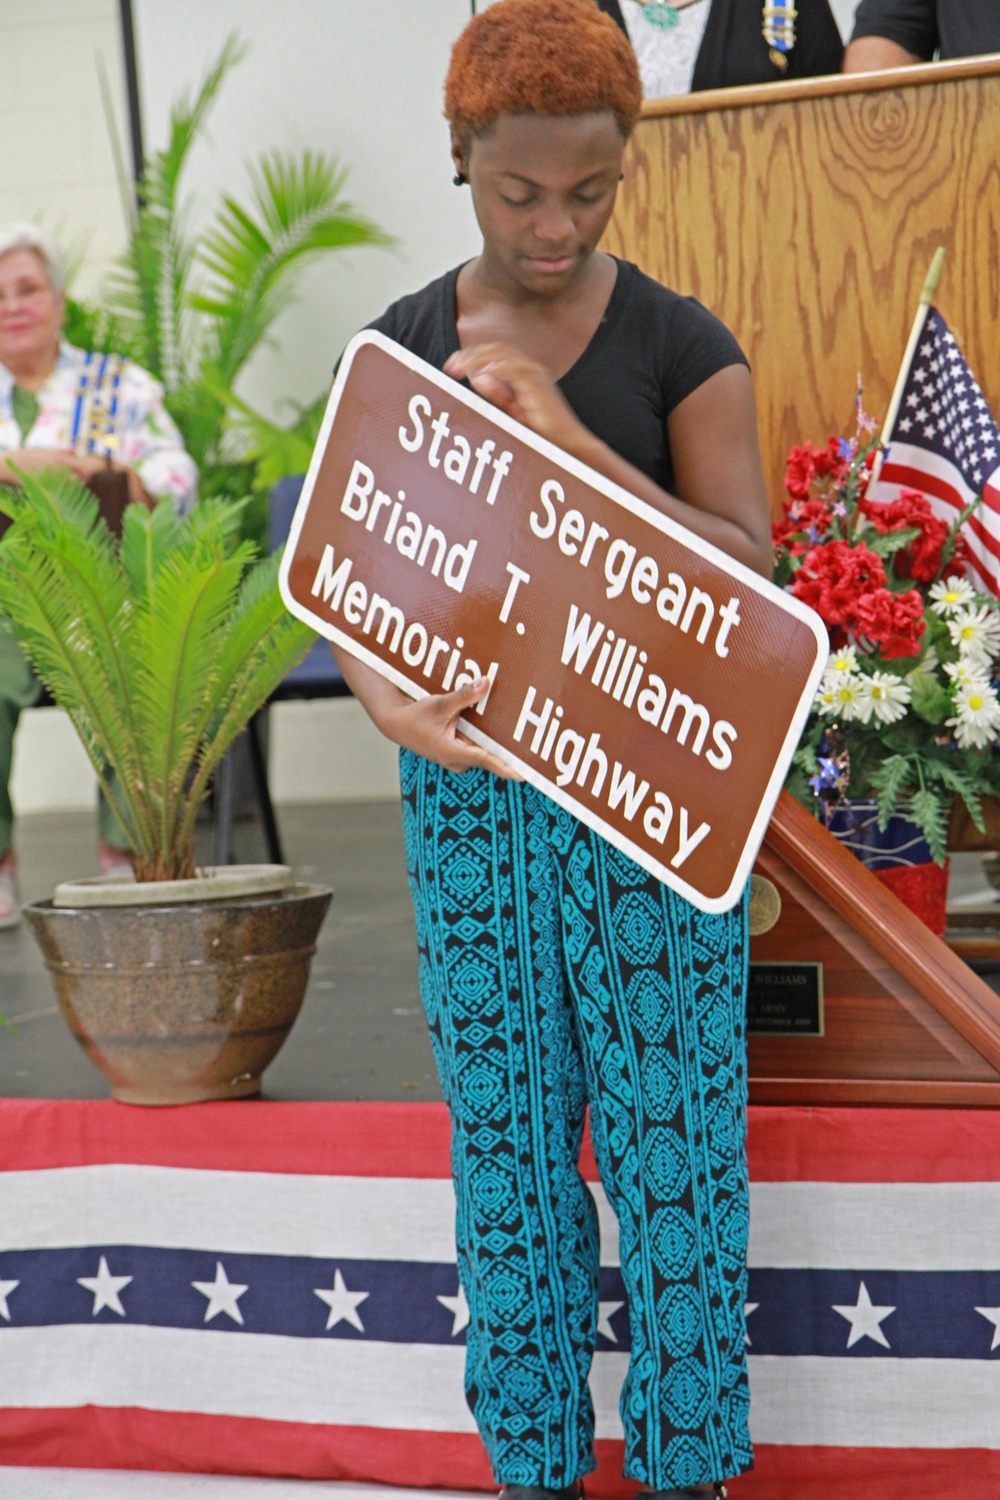 Staff Sgt. Briand T. Williams Memorial Highway dedication